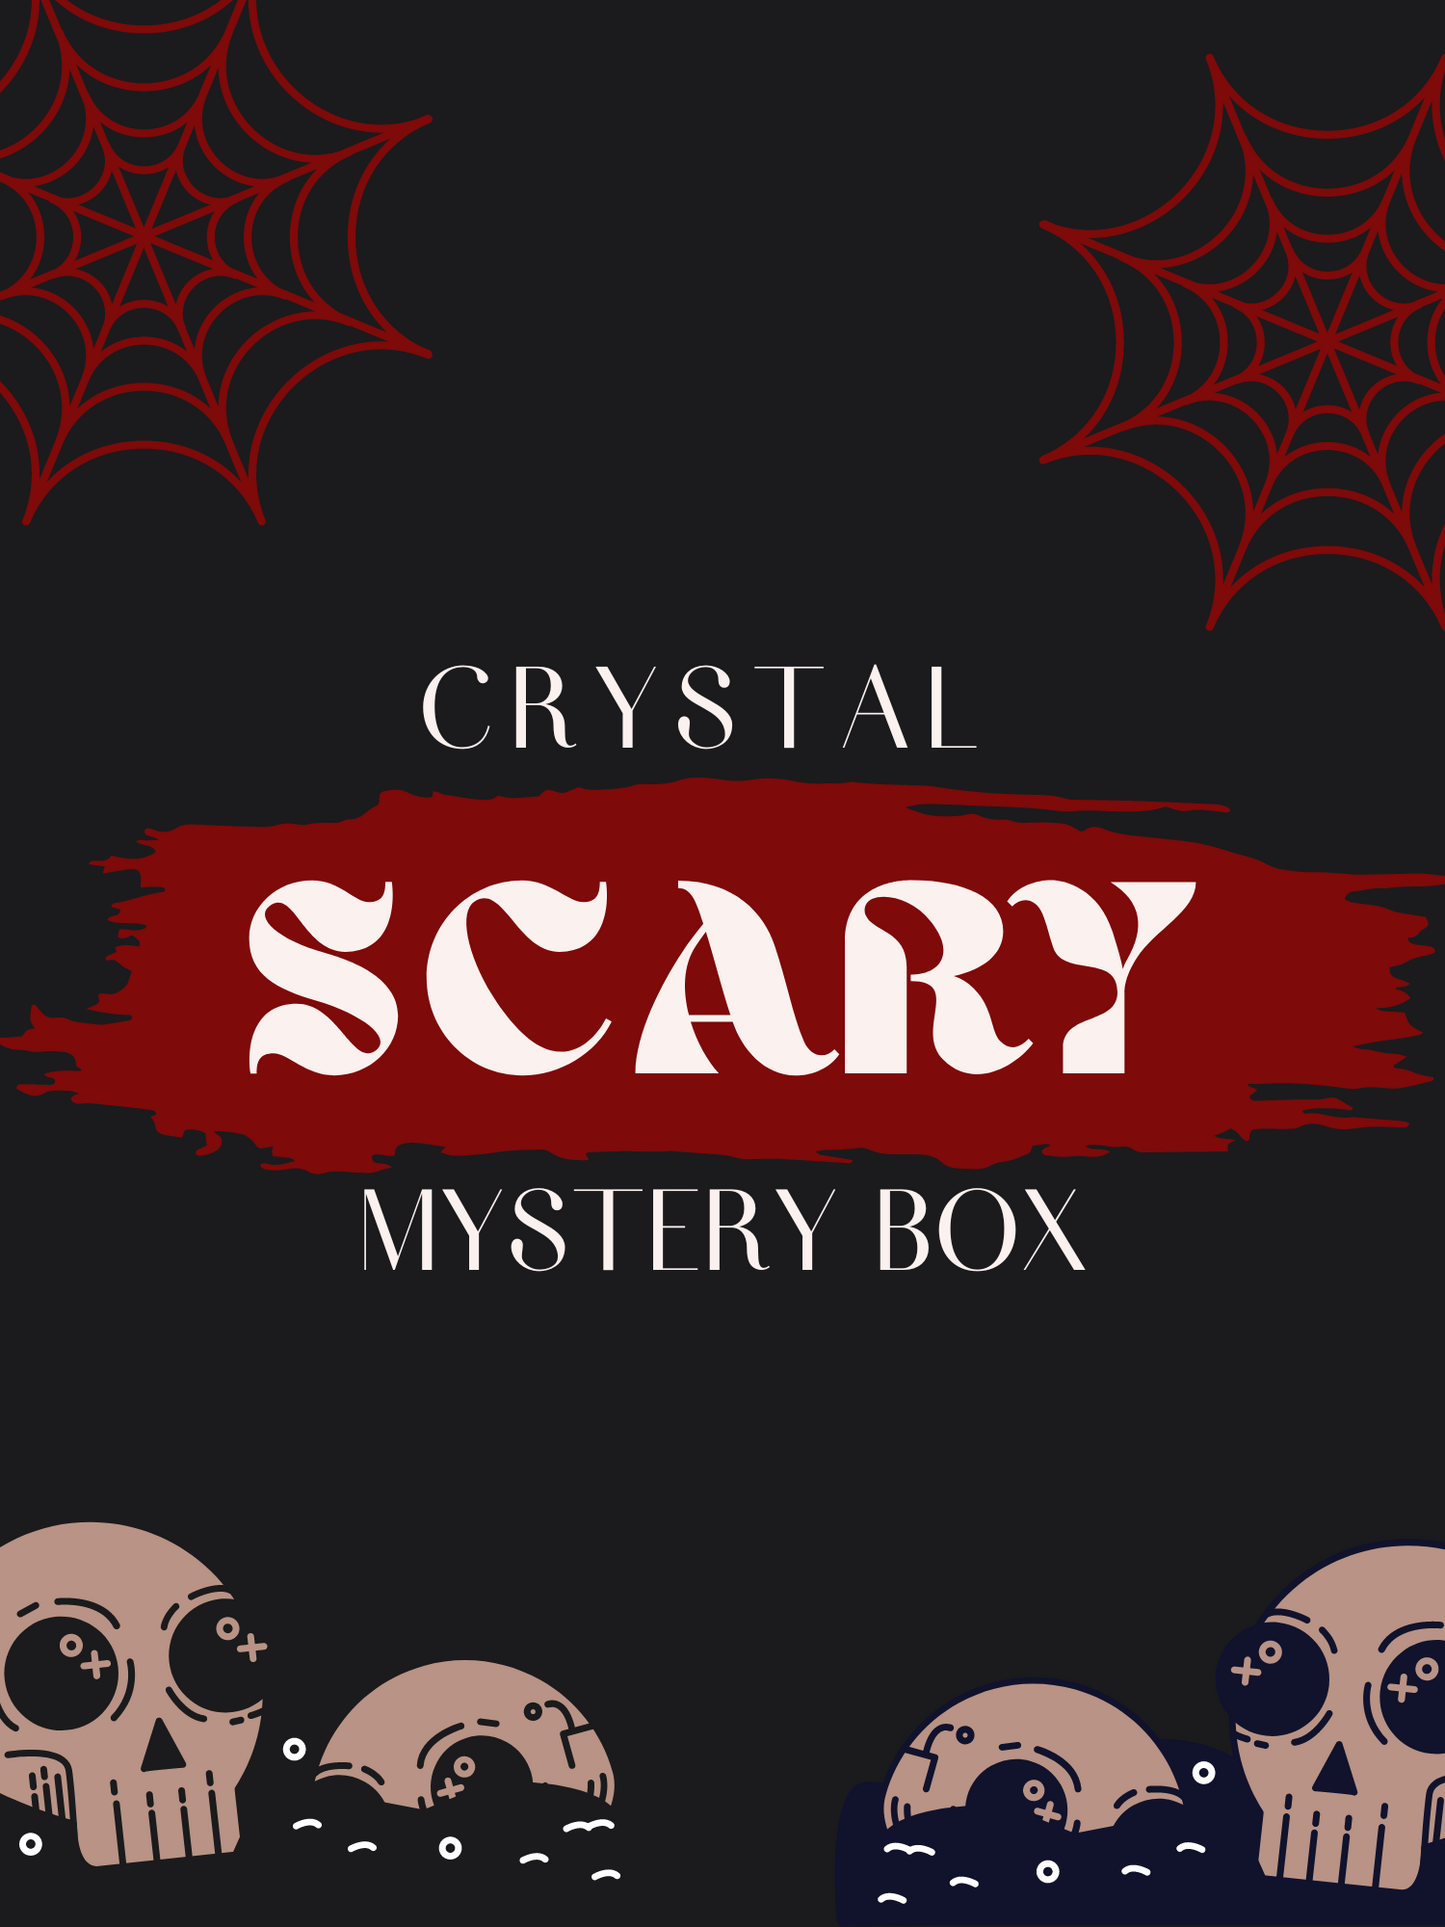 Halloween Mystery Box - 3 Sizes!